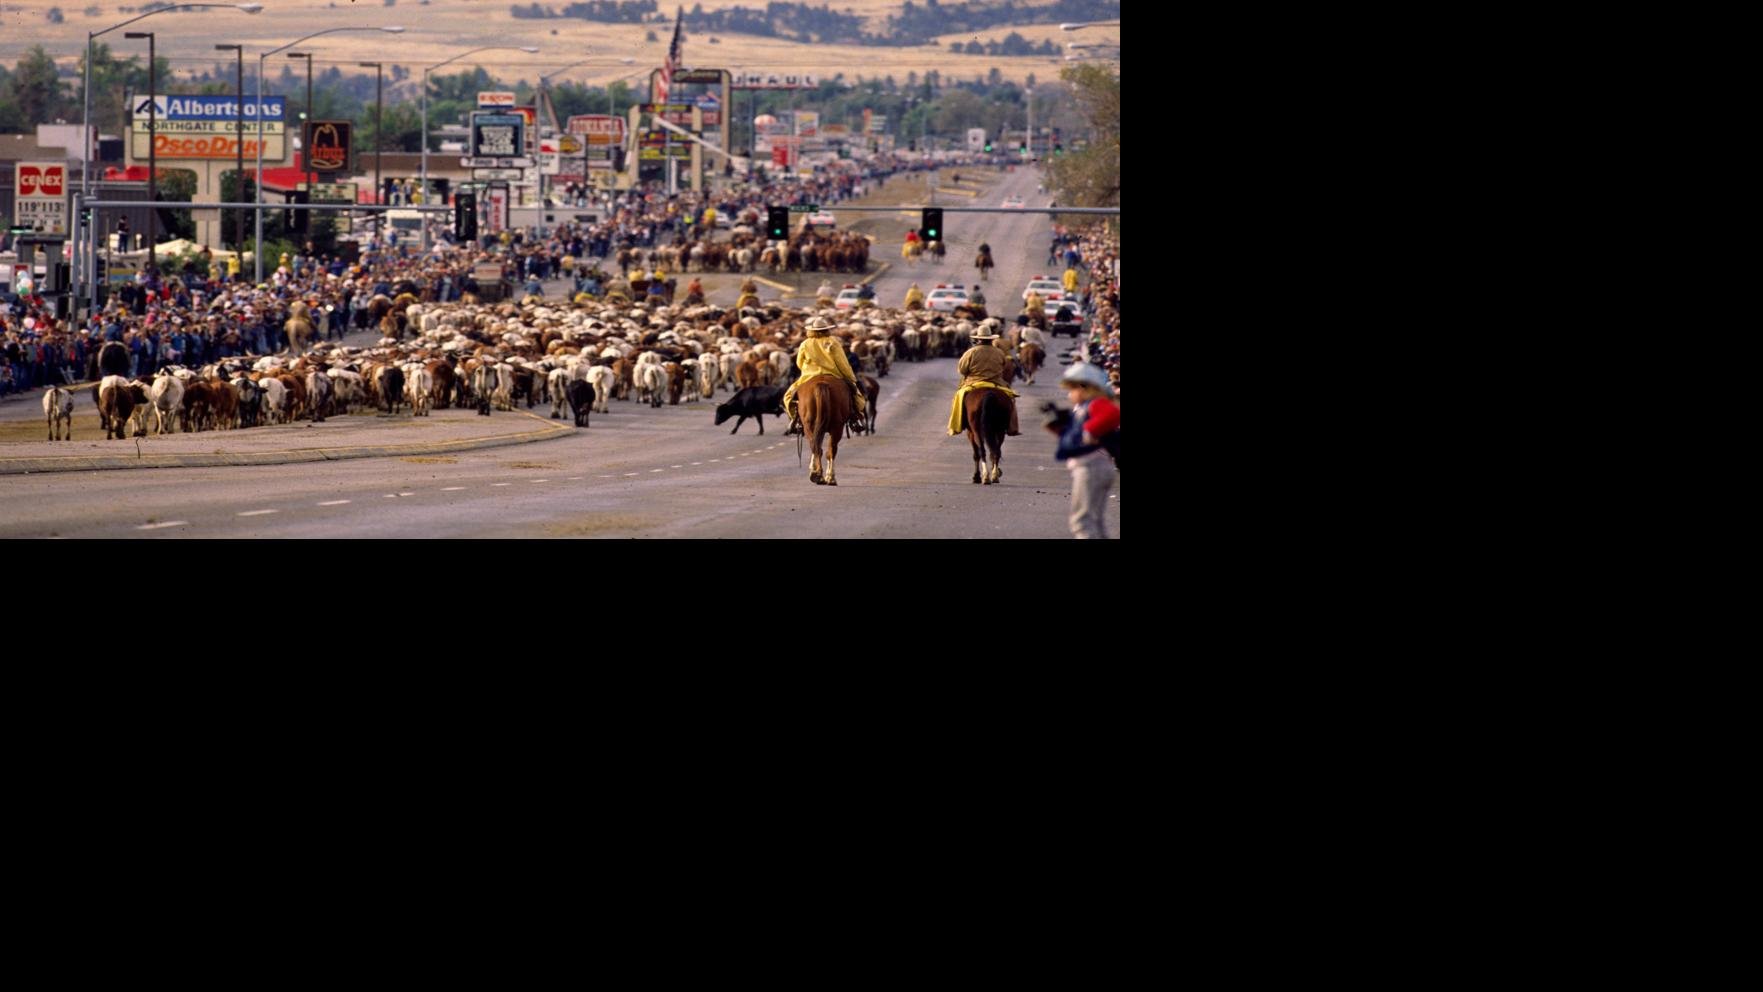 Retrospective The Great Montana Centennial Cattle Drive of 1989